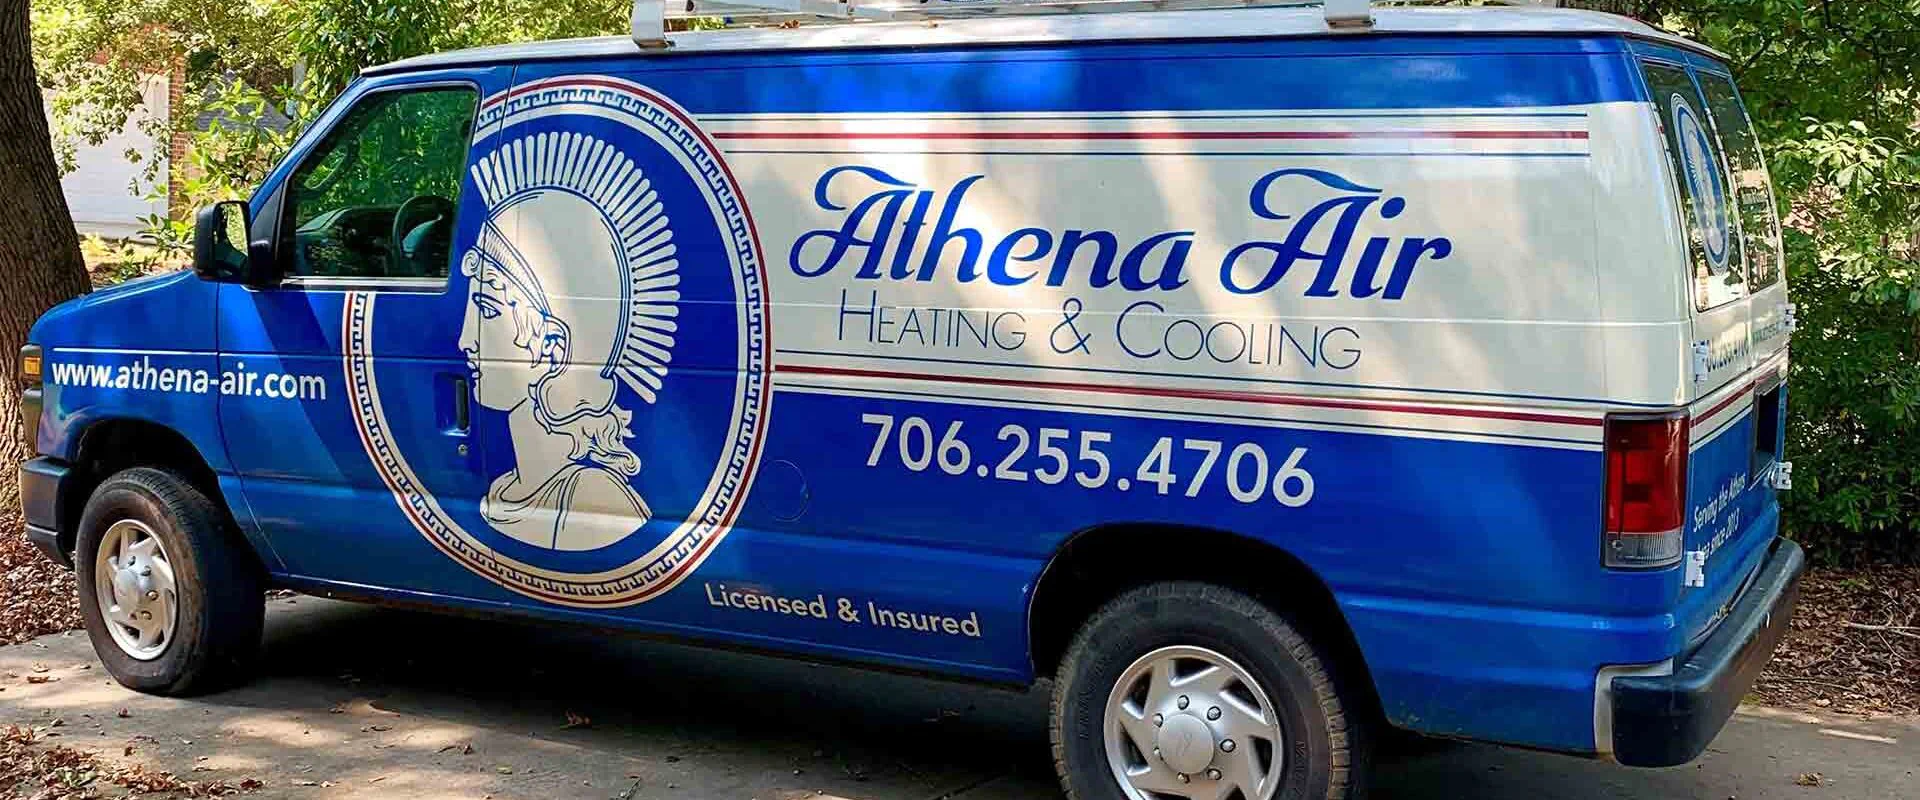 Athena air heating and cooling company van